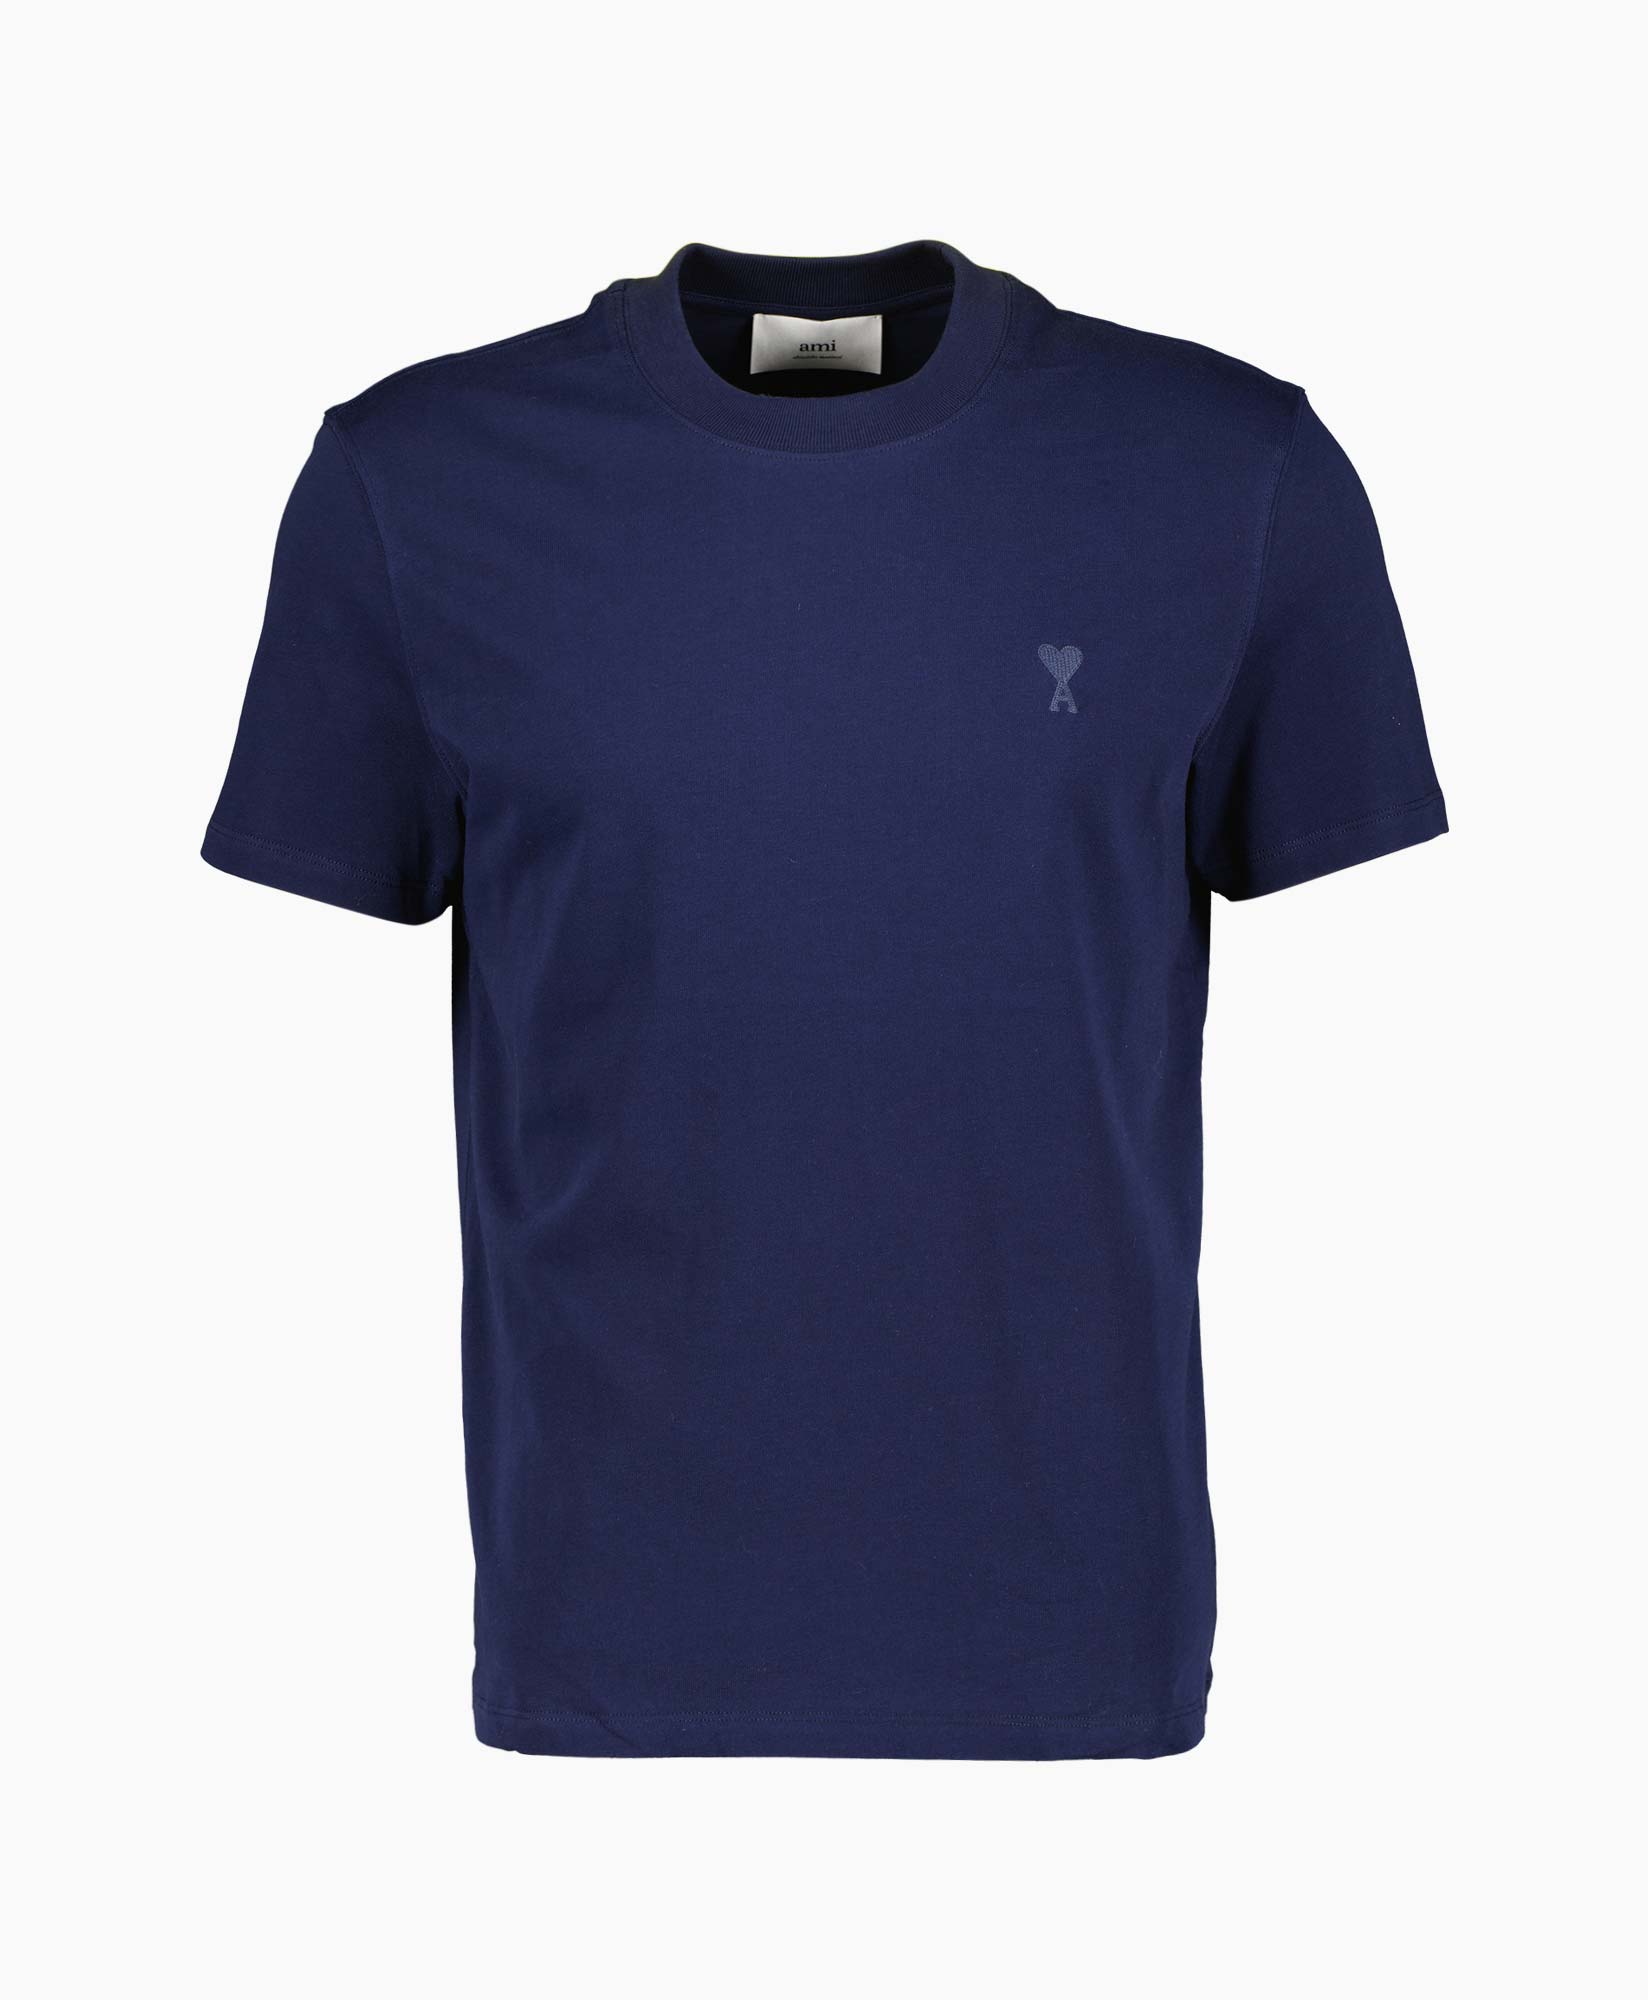 Ami T-shirt Uts022.726 Donker Blauw